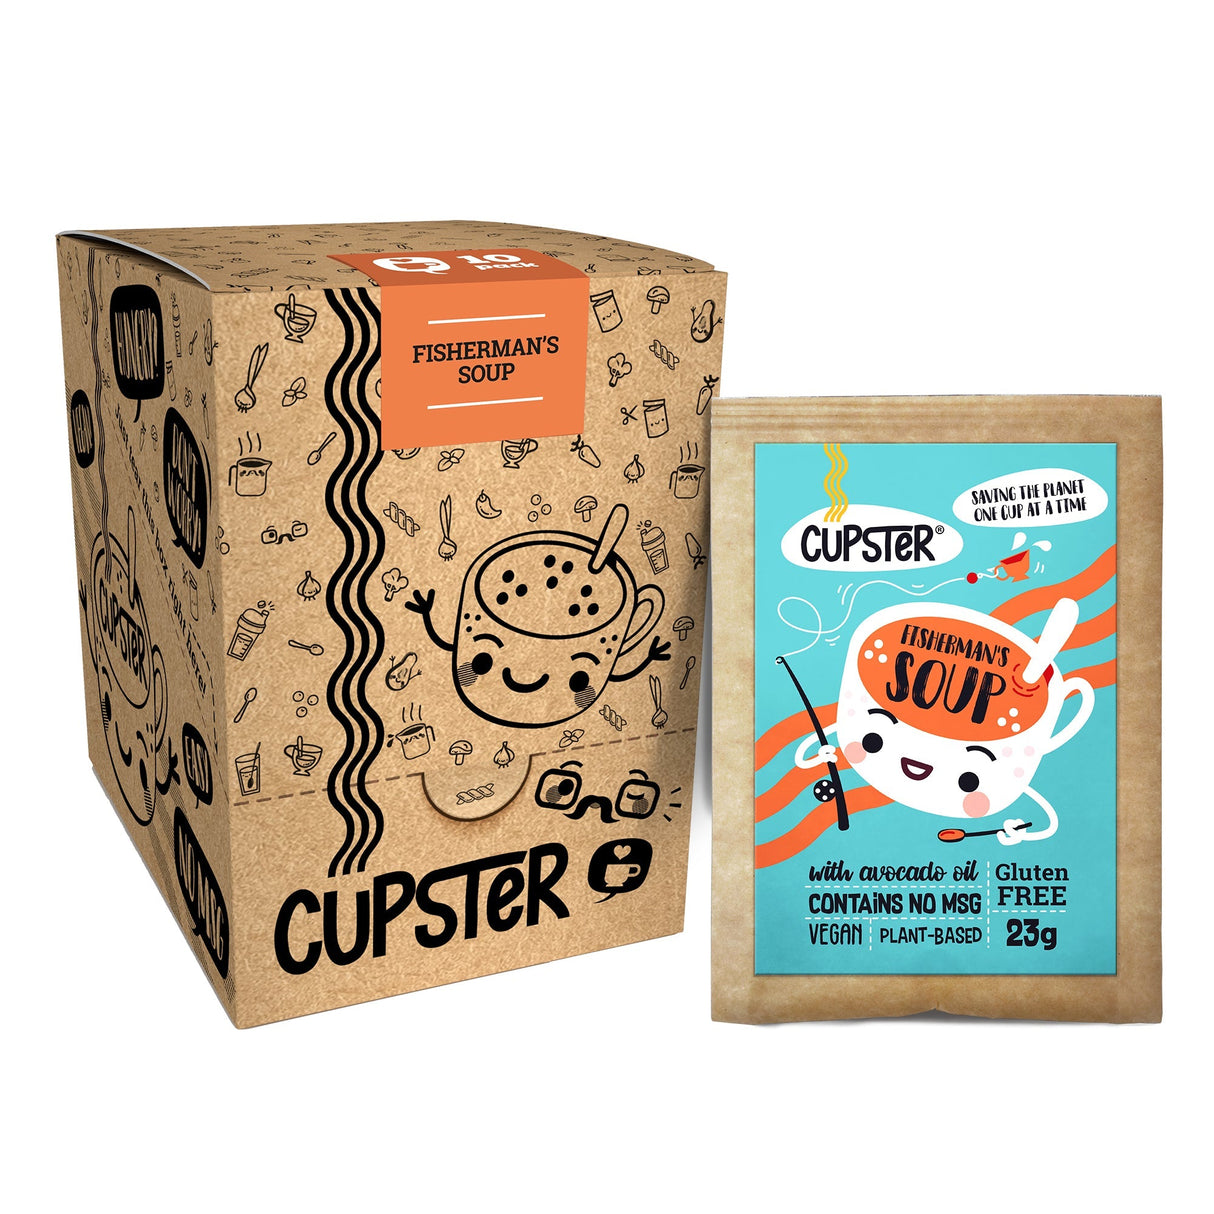 Cupster instant folyami leves 10 db - kínálódobozban